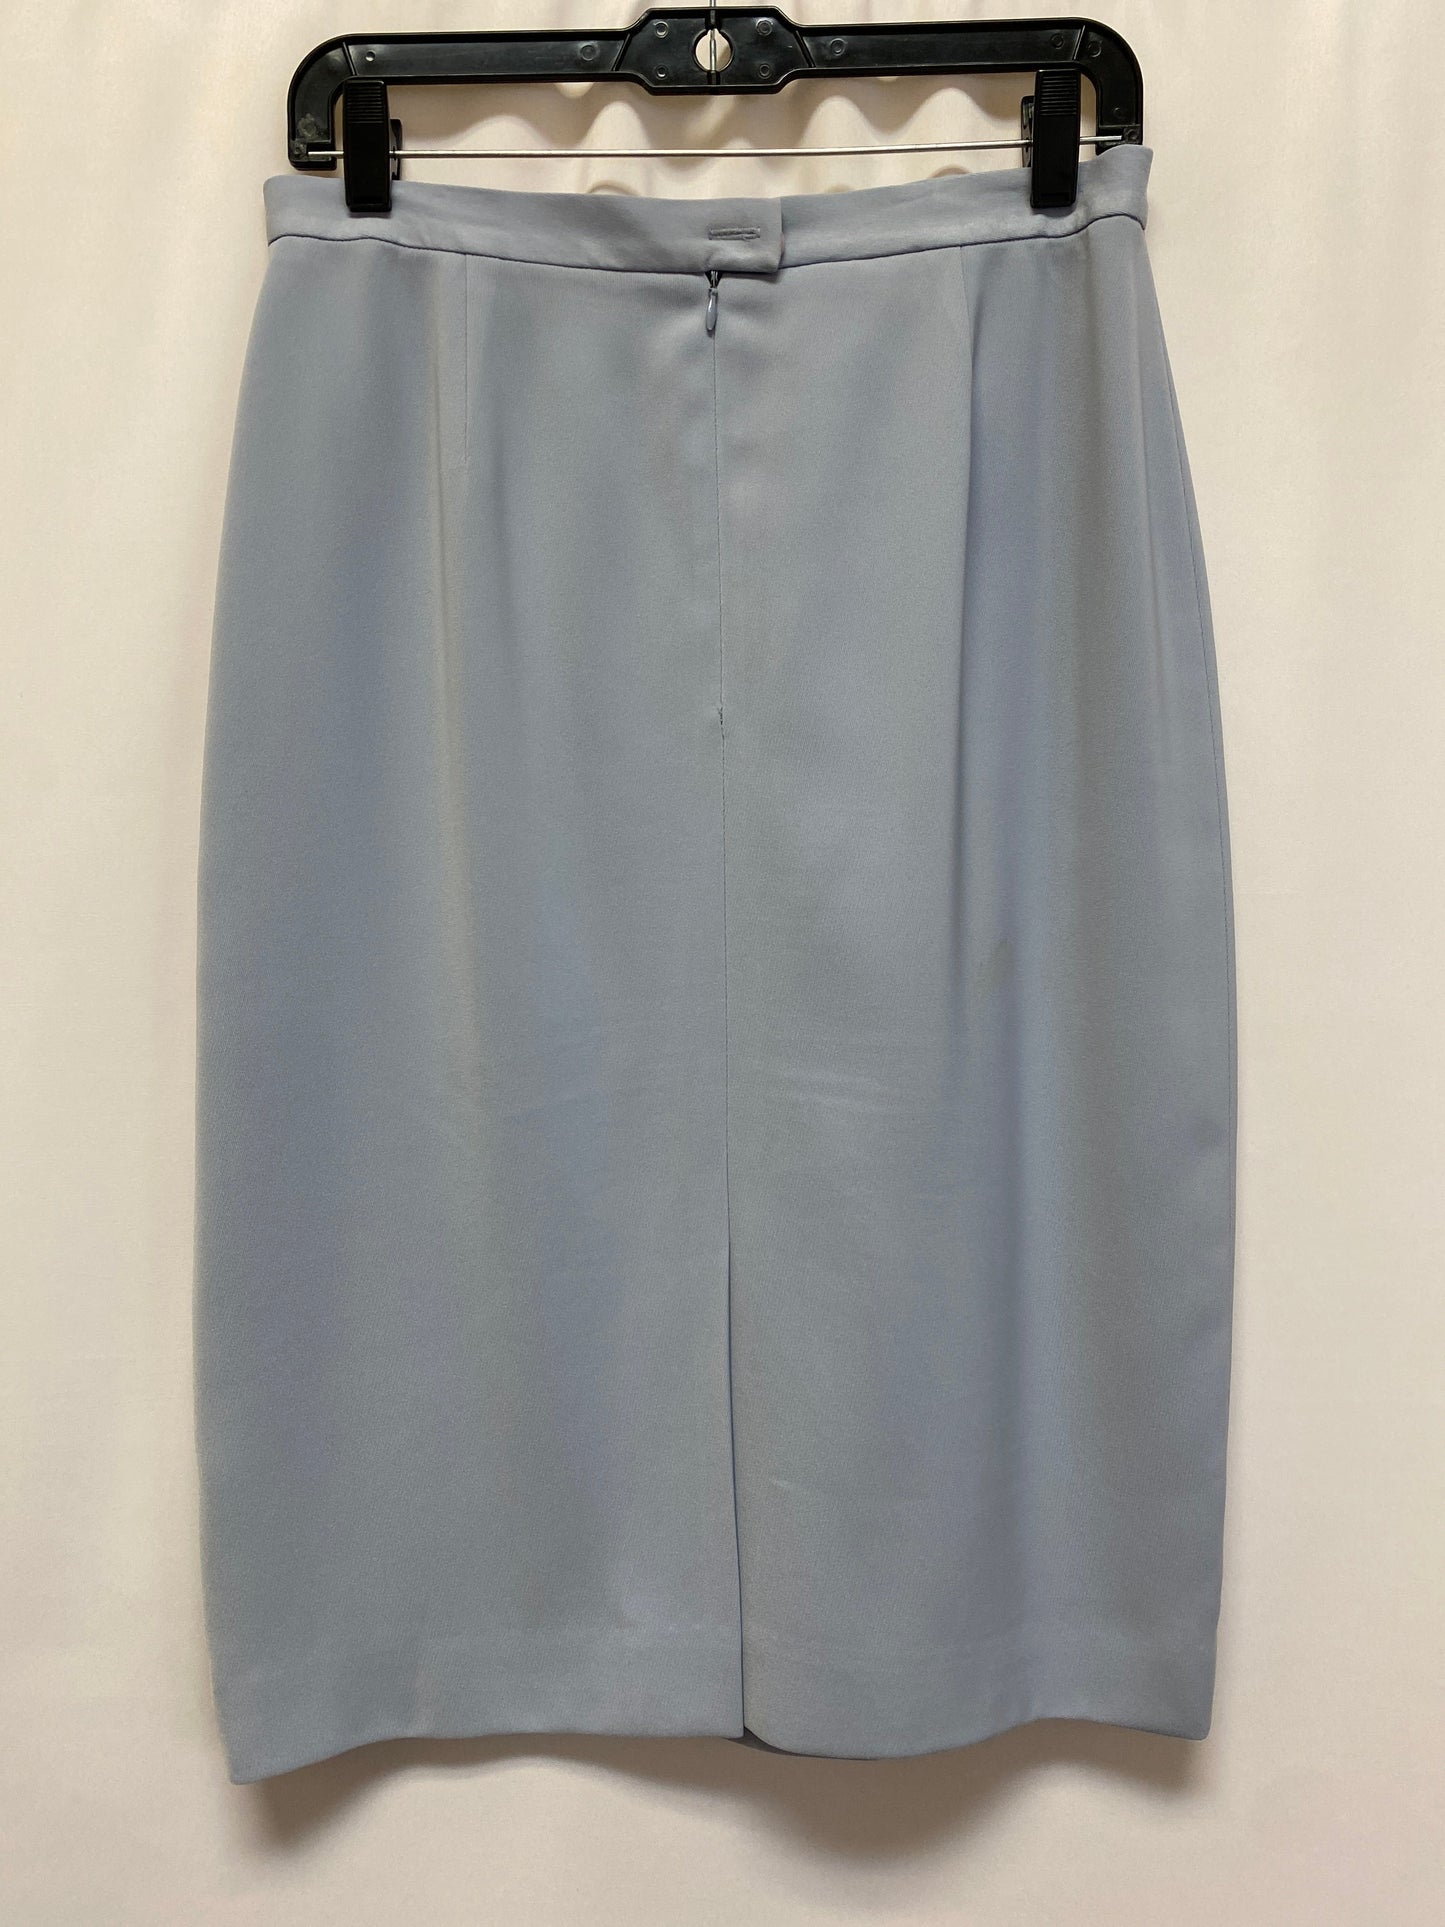 Skirt Suit 2pc By Jones New York  Size: 10